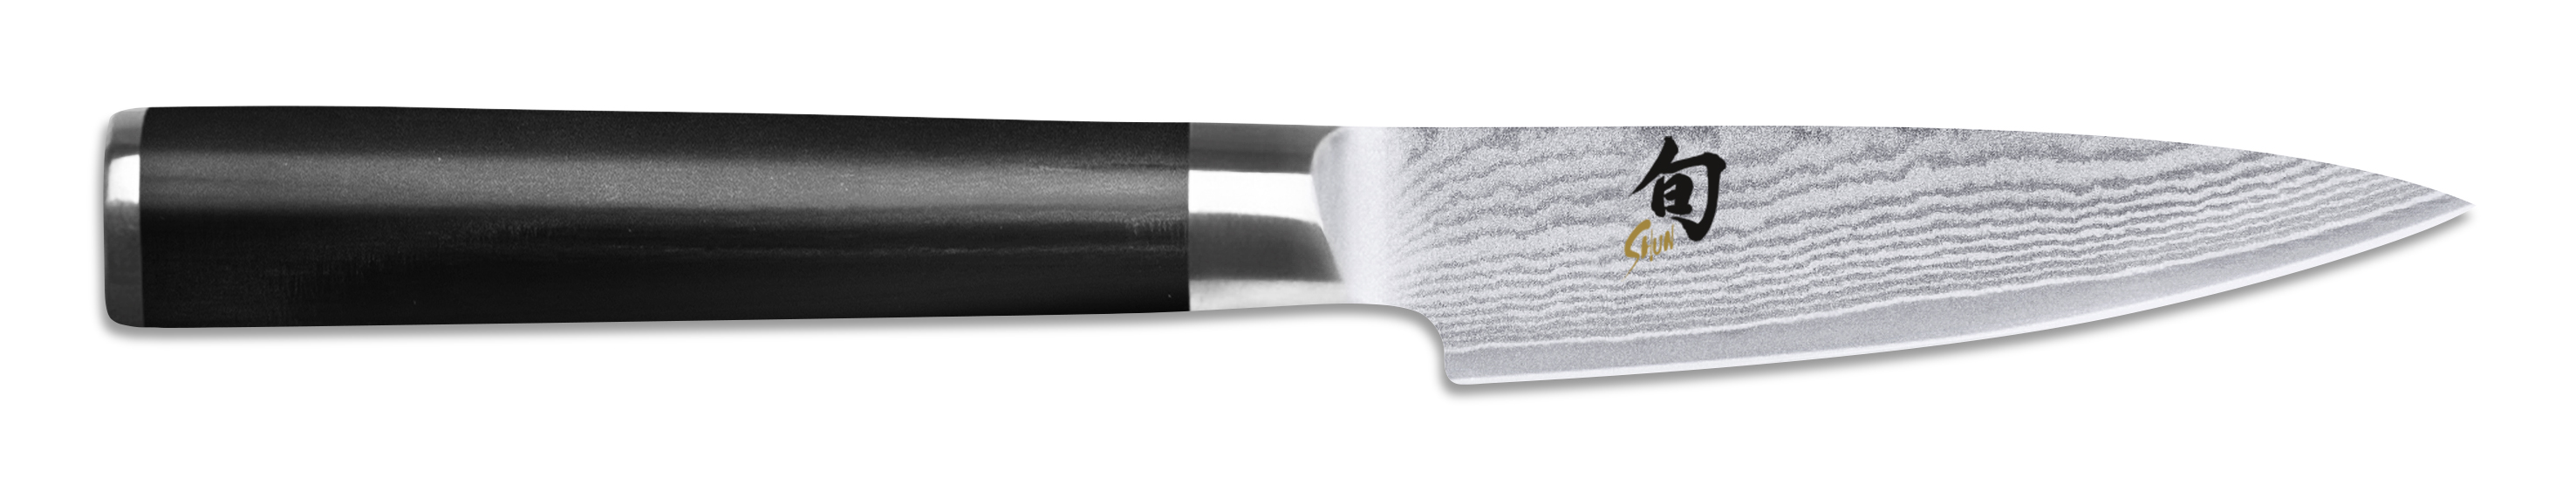 DM-0700: SHUN Kochmesser/Cook Knife Office Knife 3,6 (9,0 cm)